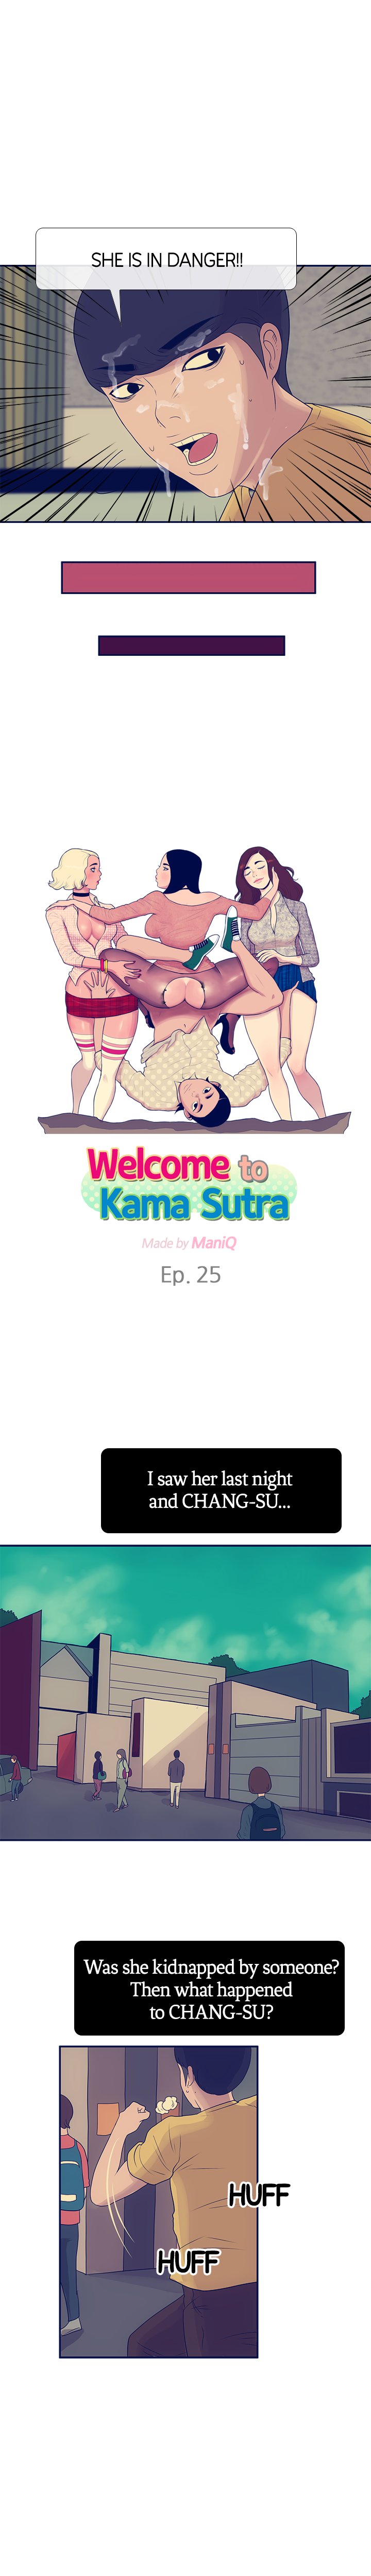 Welcome to Kama Sutra image